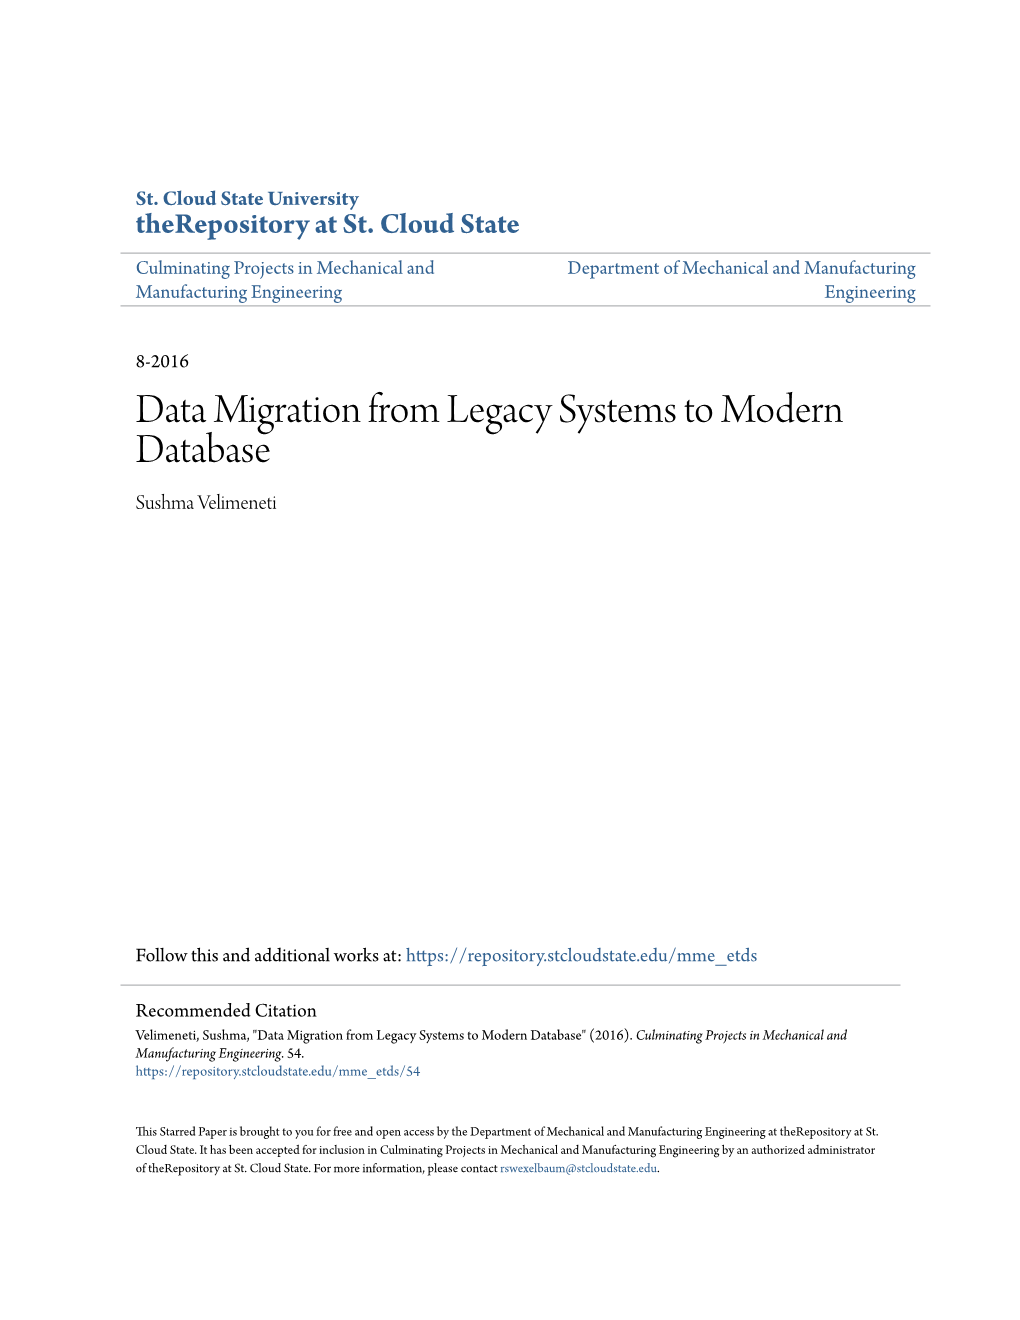 Data Migration from Legacy Systems to Modern Database Sushma Velimeneti